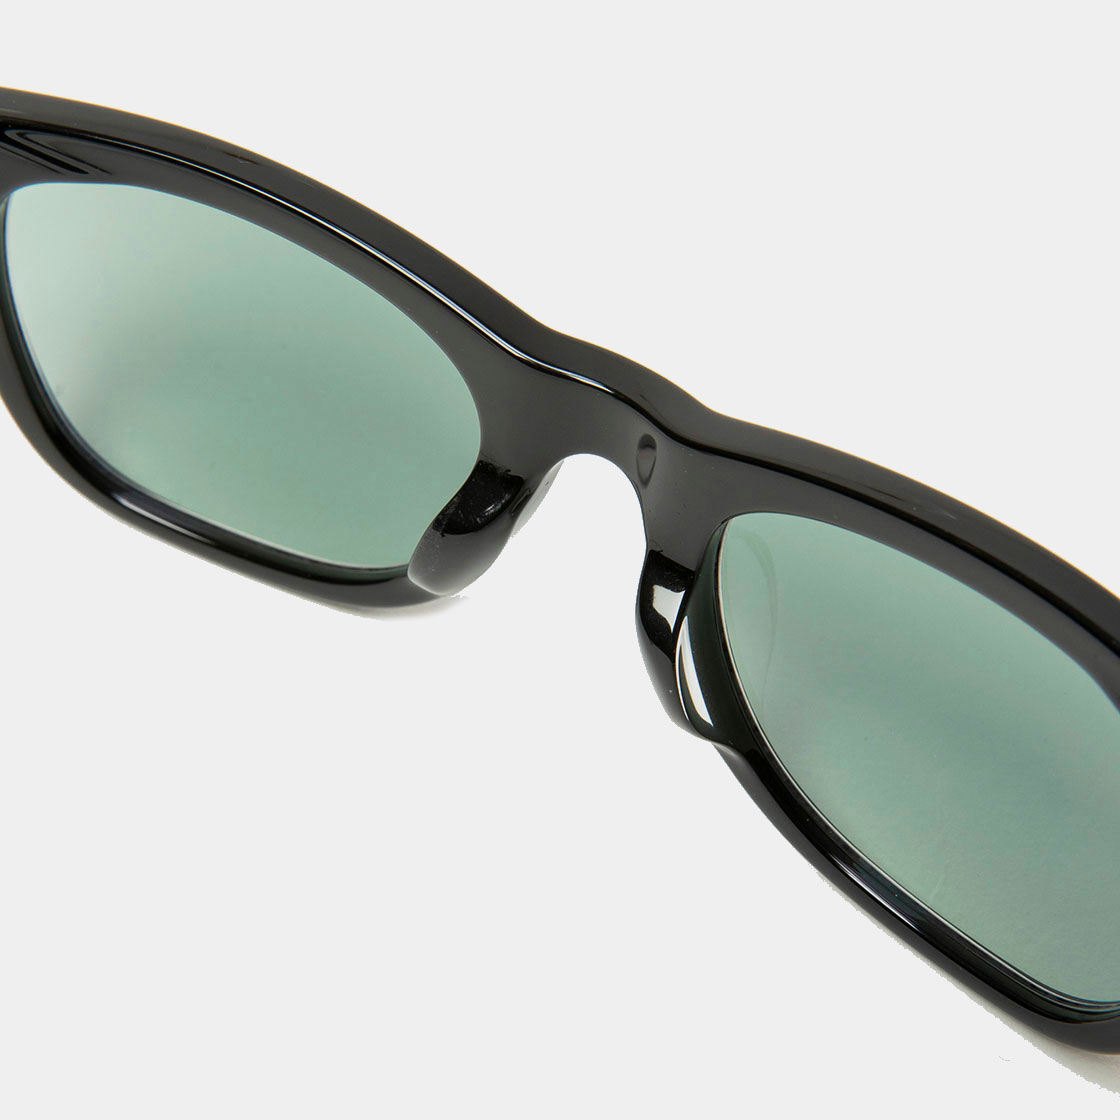 Transition Color Glasses “Neutral Color” / Black×Pilot Green